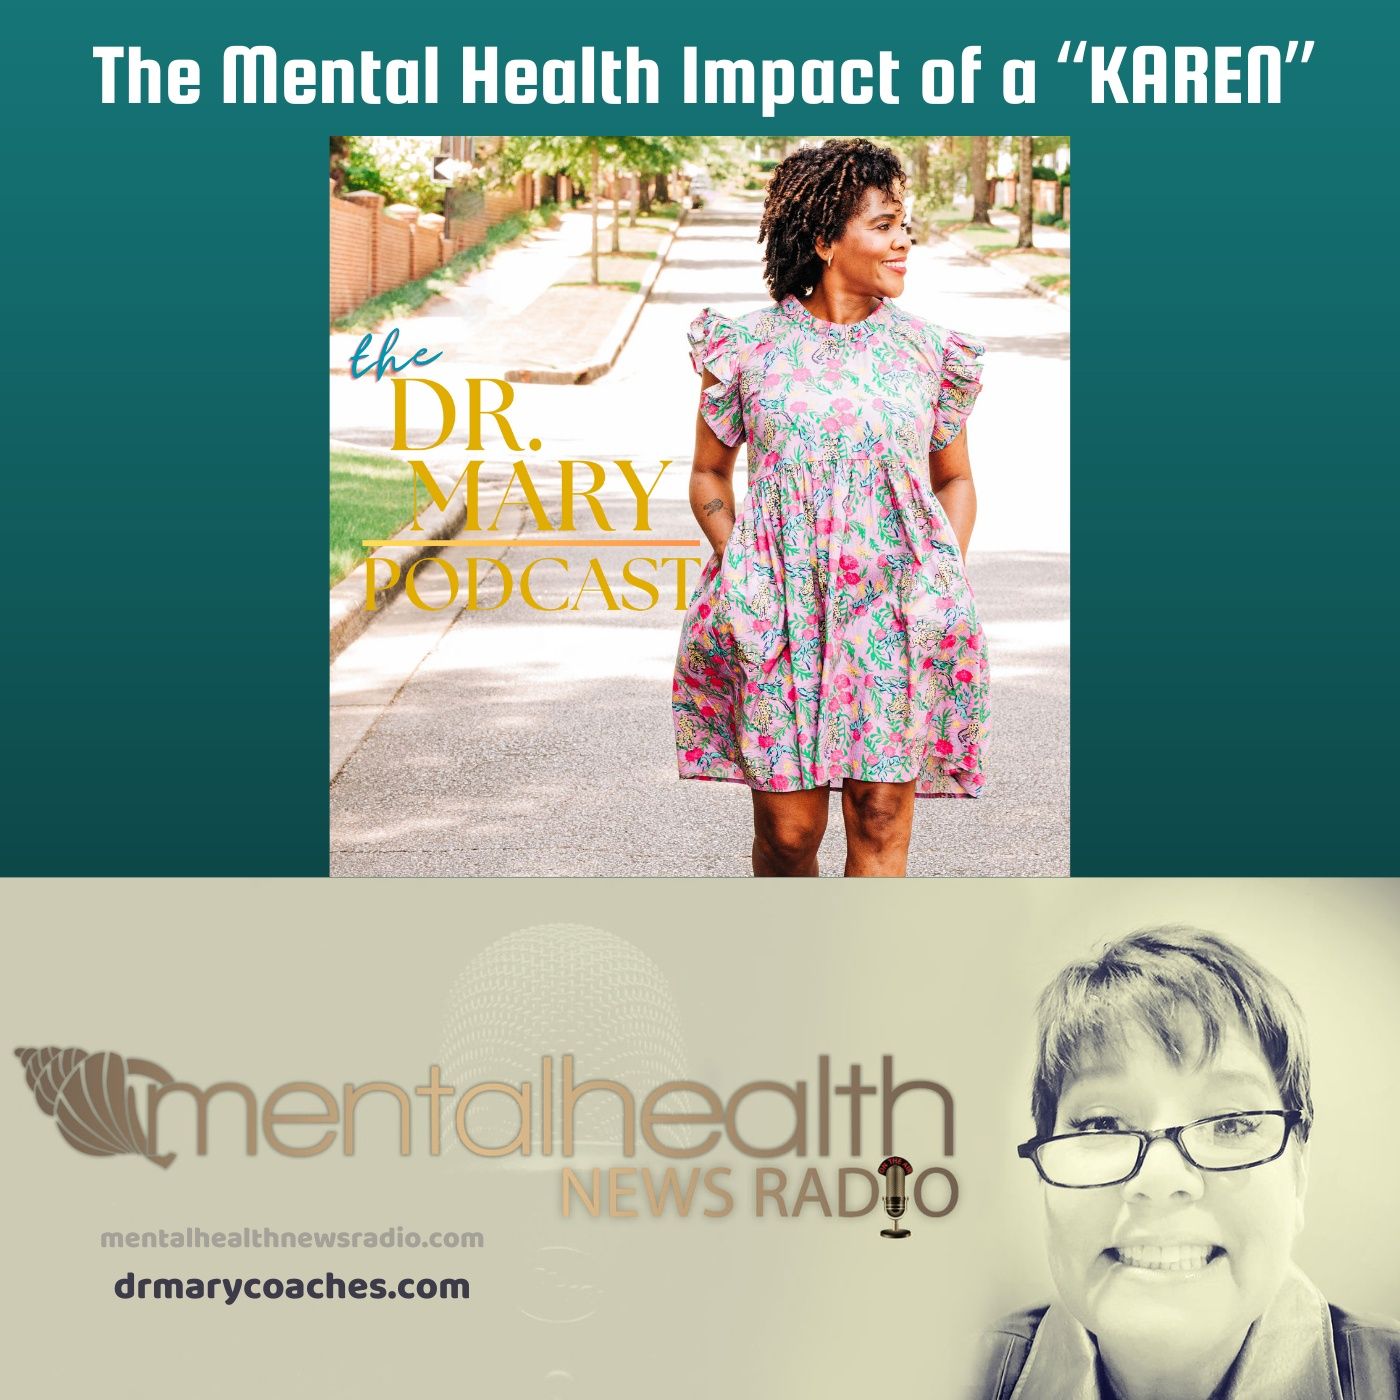 The Mental Health Impact of a ”Karen”